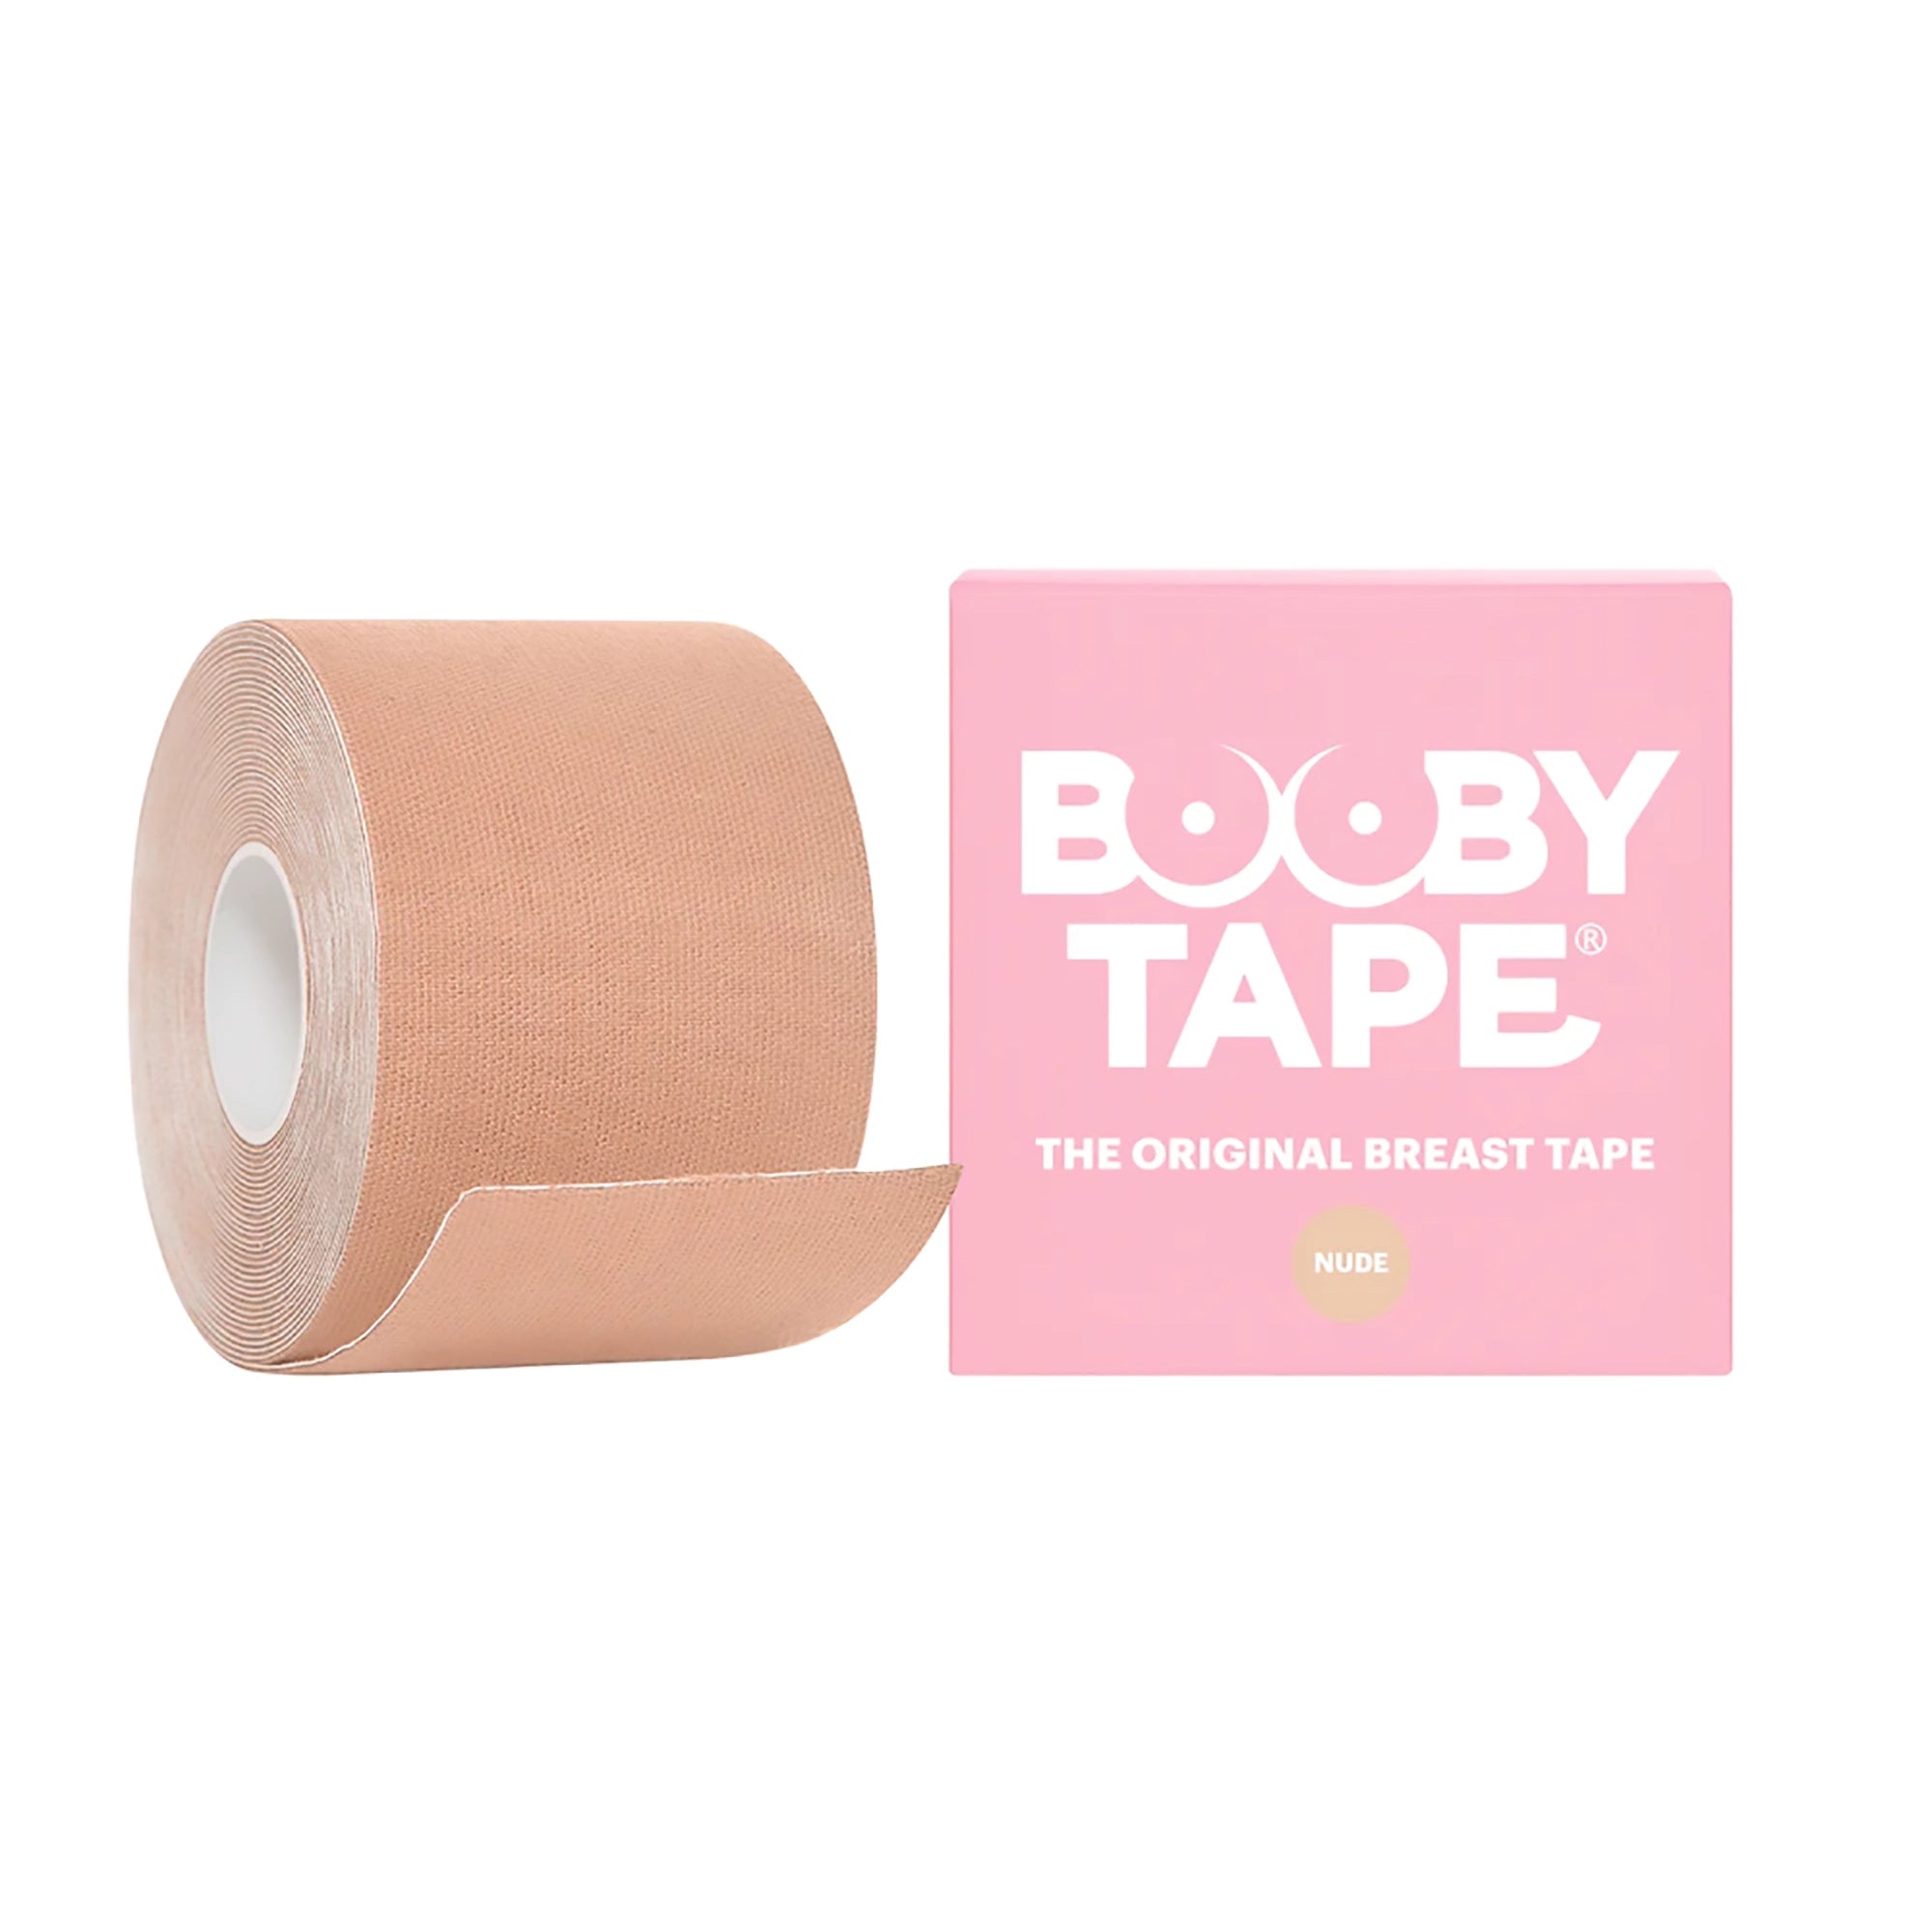 Booby Tape Boob Tape / NUDE